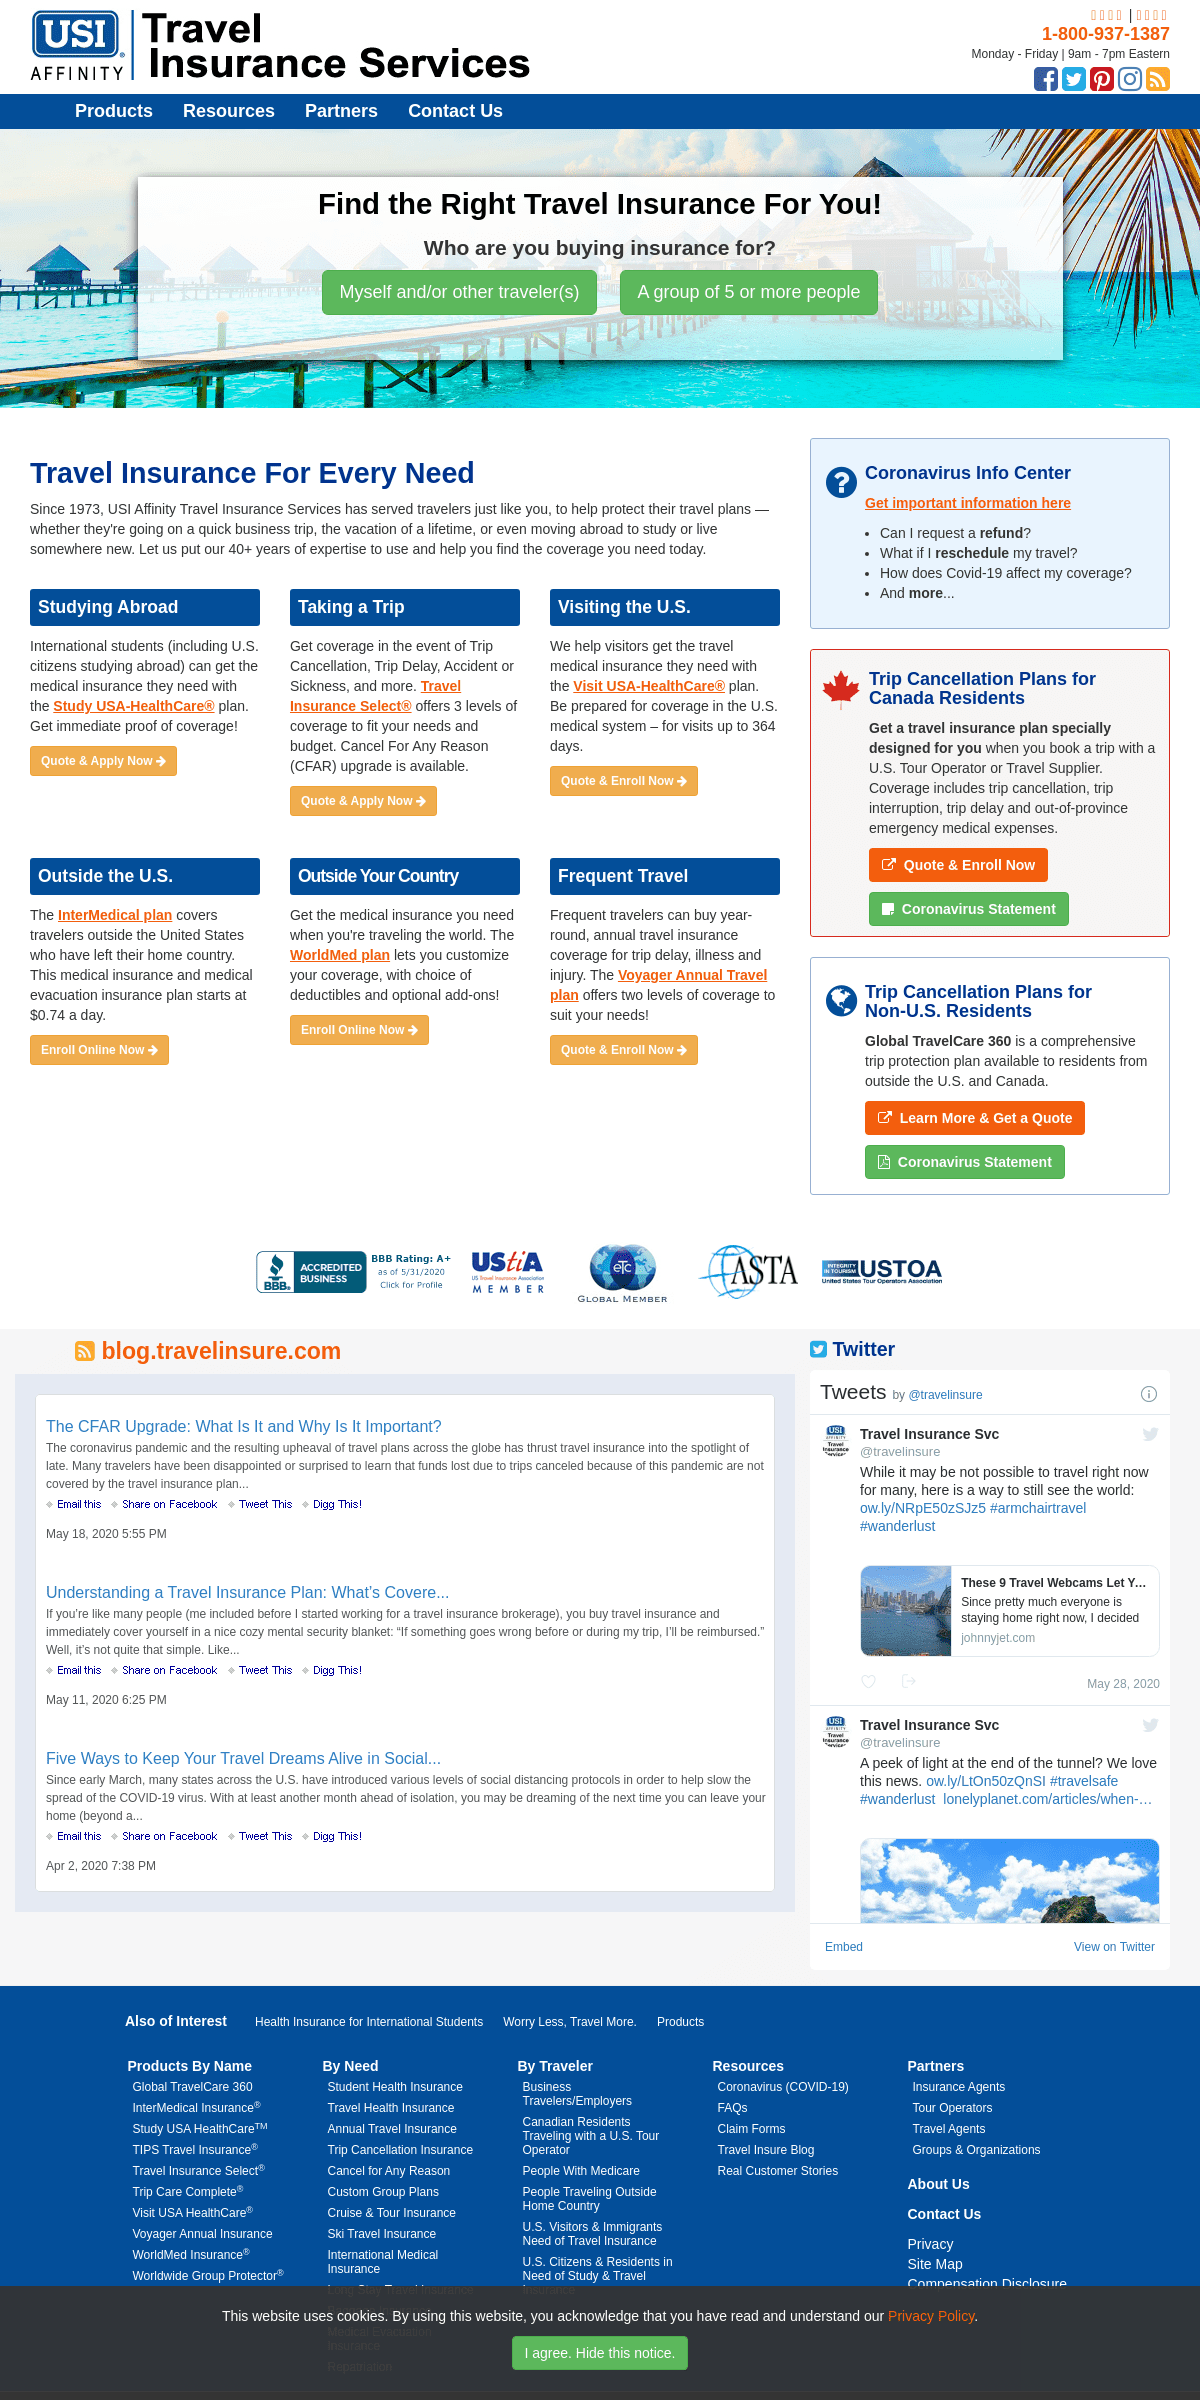 A complete backup of travelinsure.com